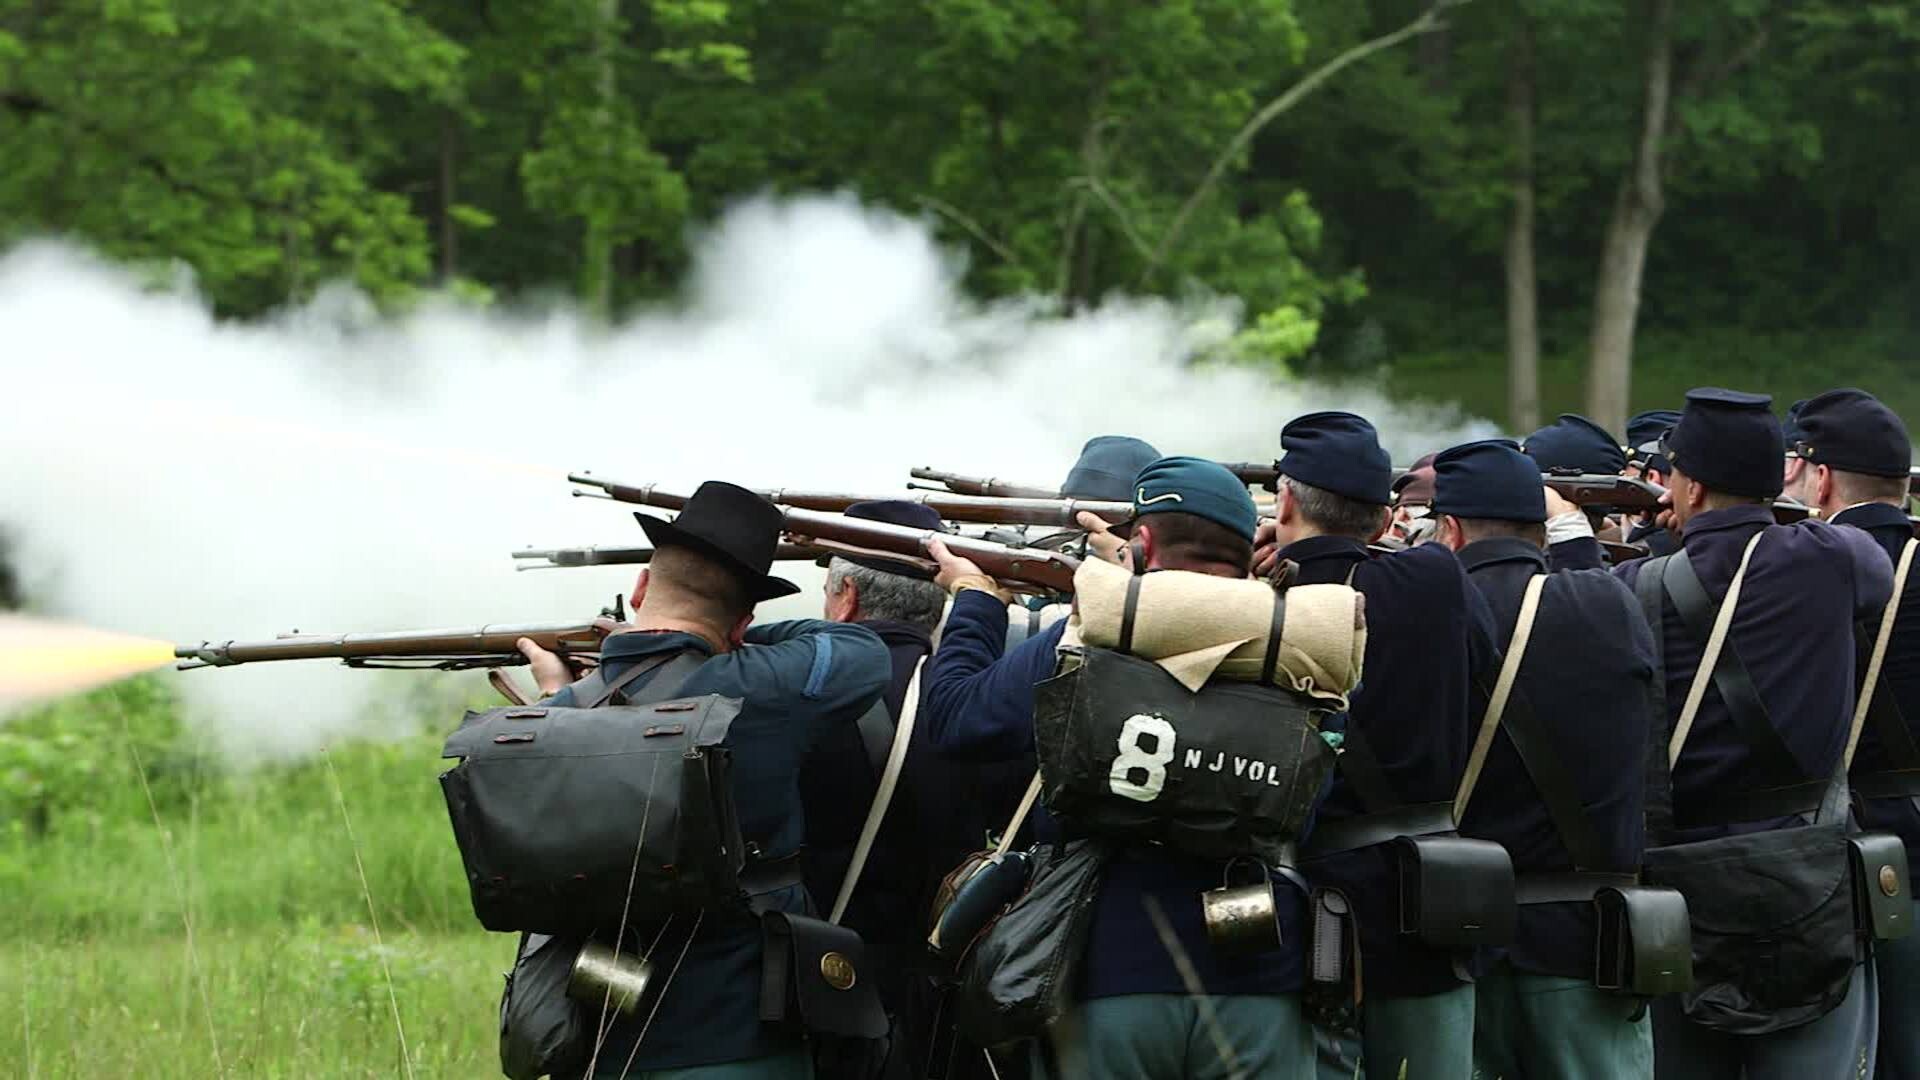 Gettysburg: The Army of Potomac reenactors, American Civil War military uniform and weaponry. 1920x1080 Full HD Wallpaper.